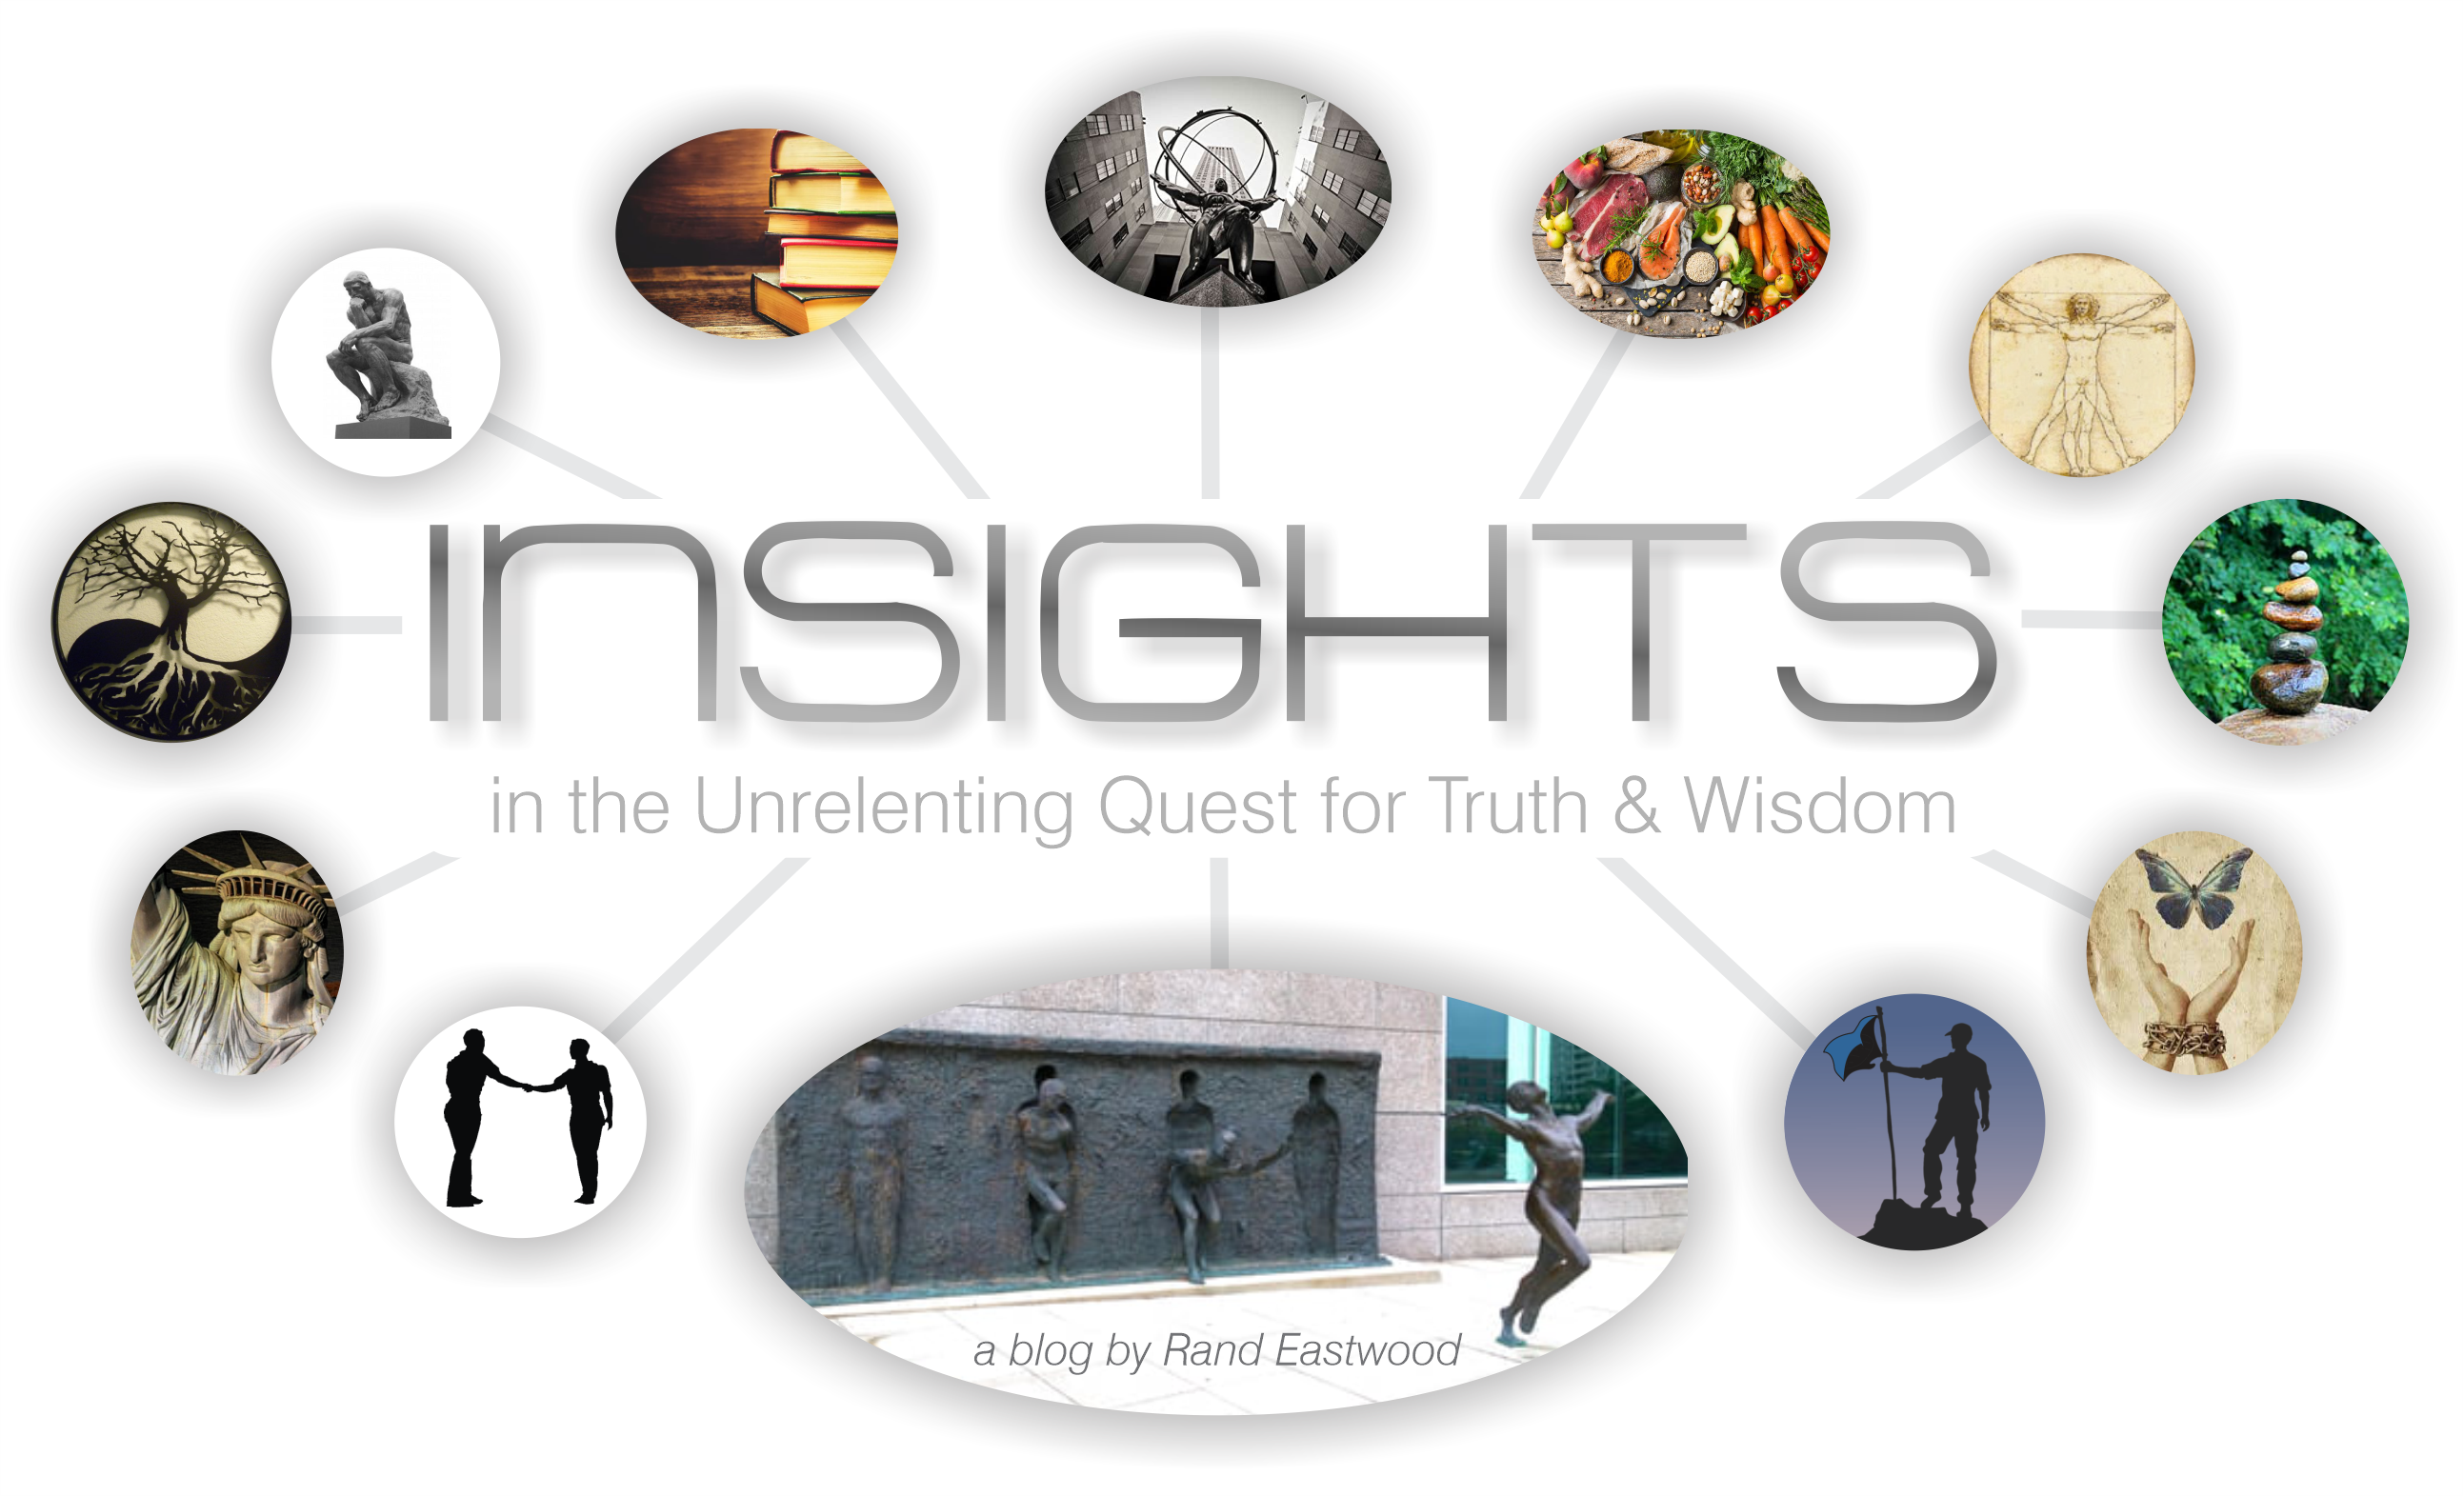 The Unrelenting Quest for Truth & Wisdom